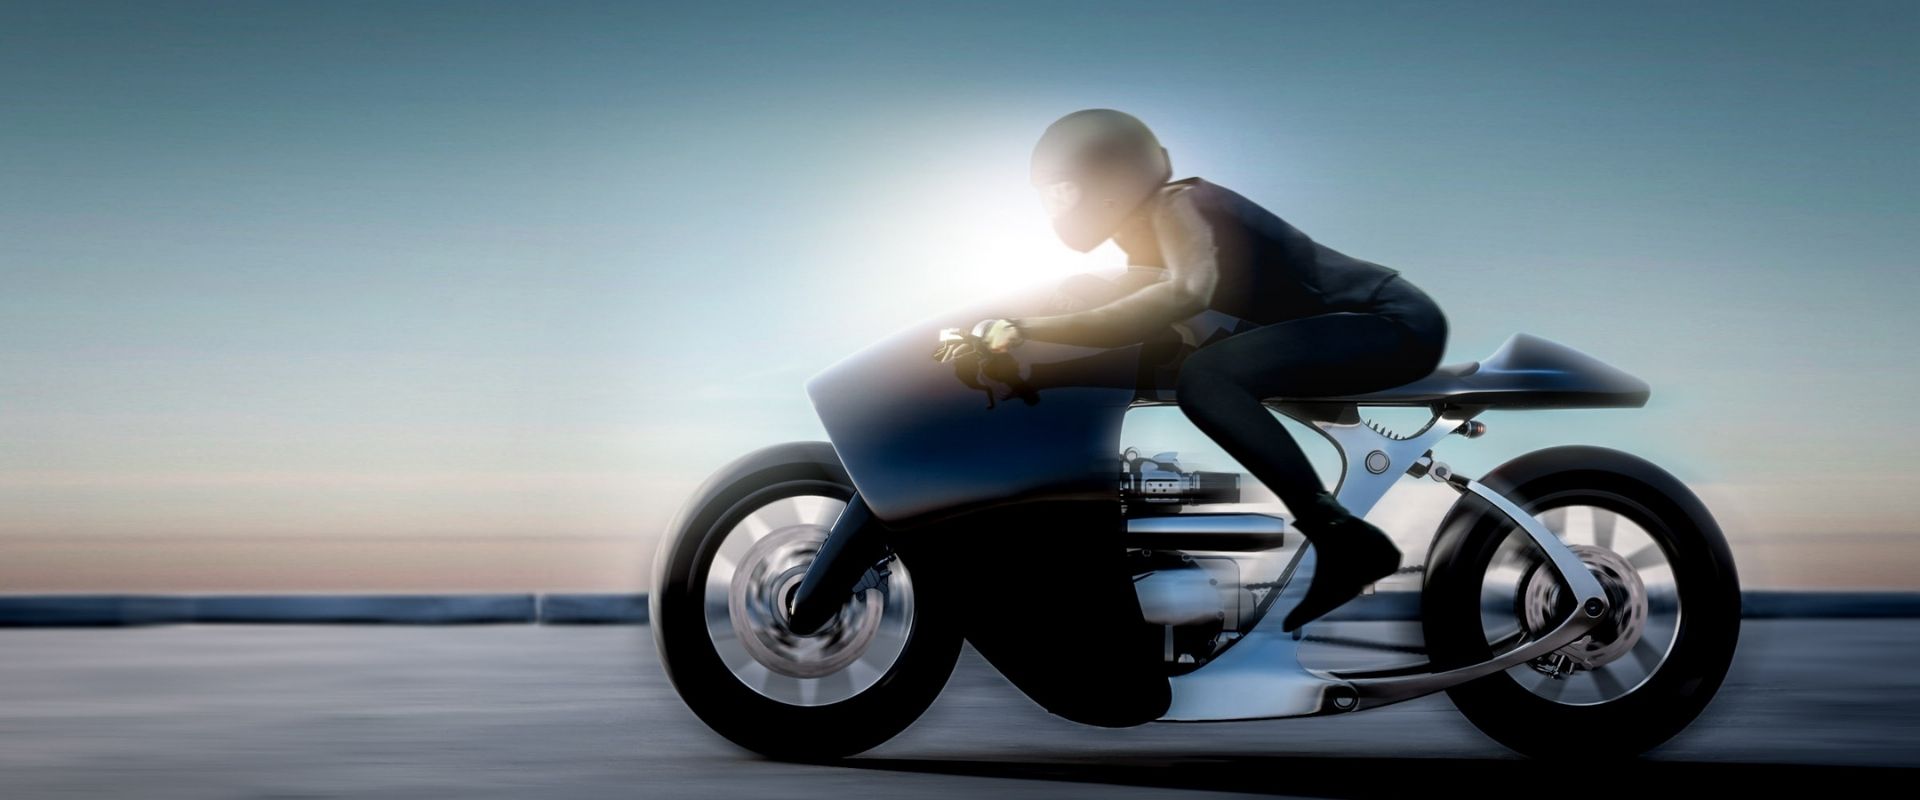 supermarine bandit9 motors motocicleta